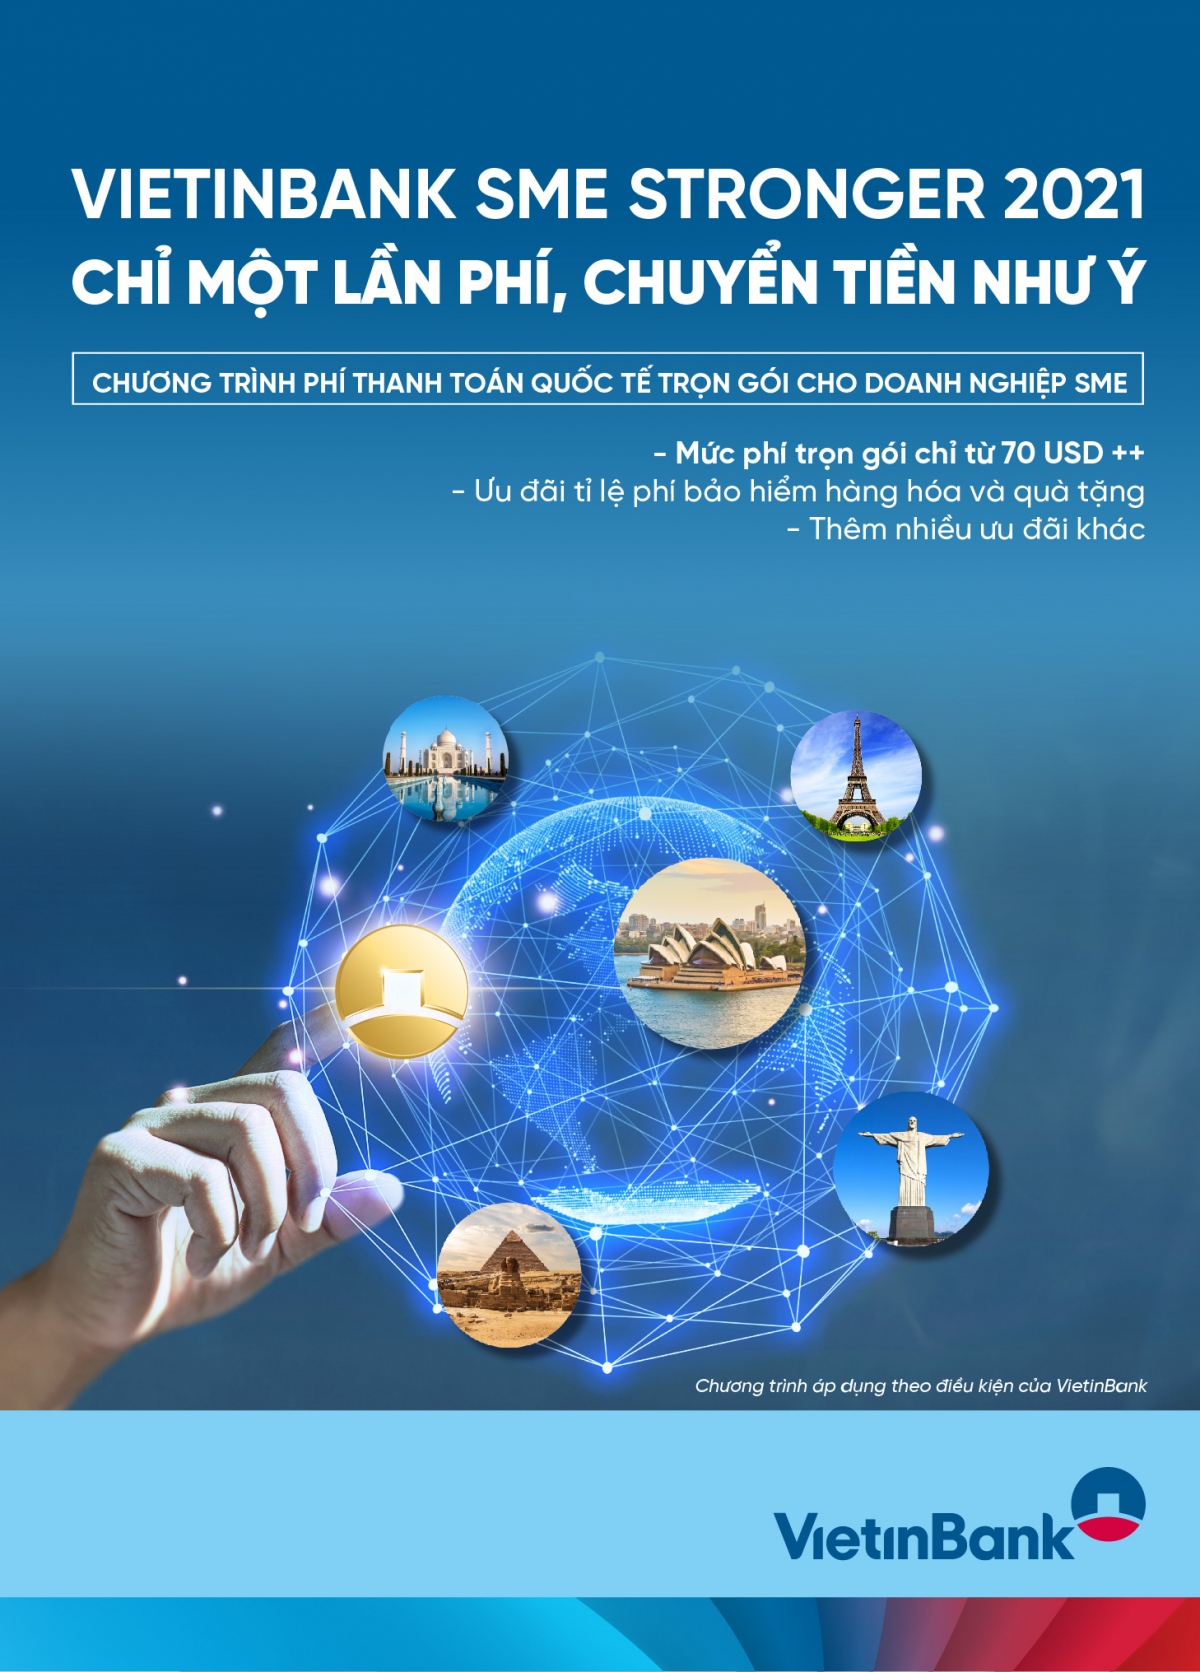 vietinbank sme stronger 2021 - chi mot lan phi, chuyen tien nhu y hinh anh 1